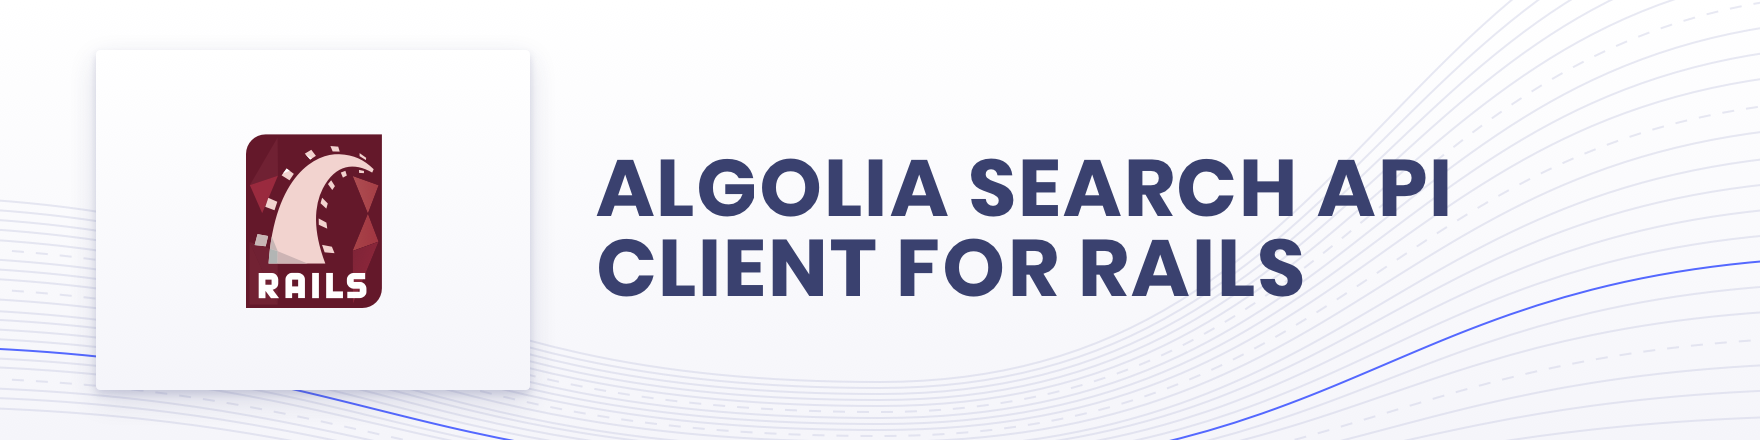 Algolia for Rails